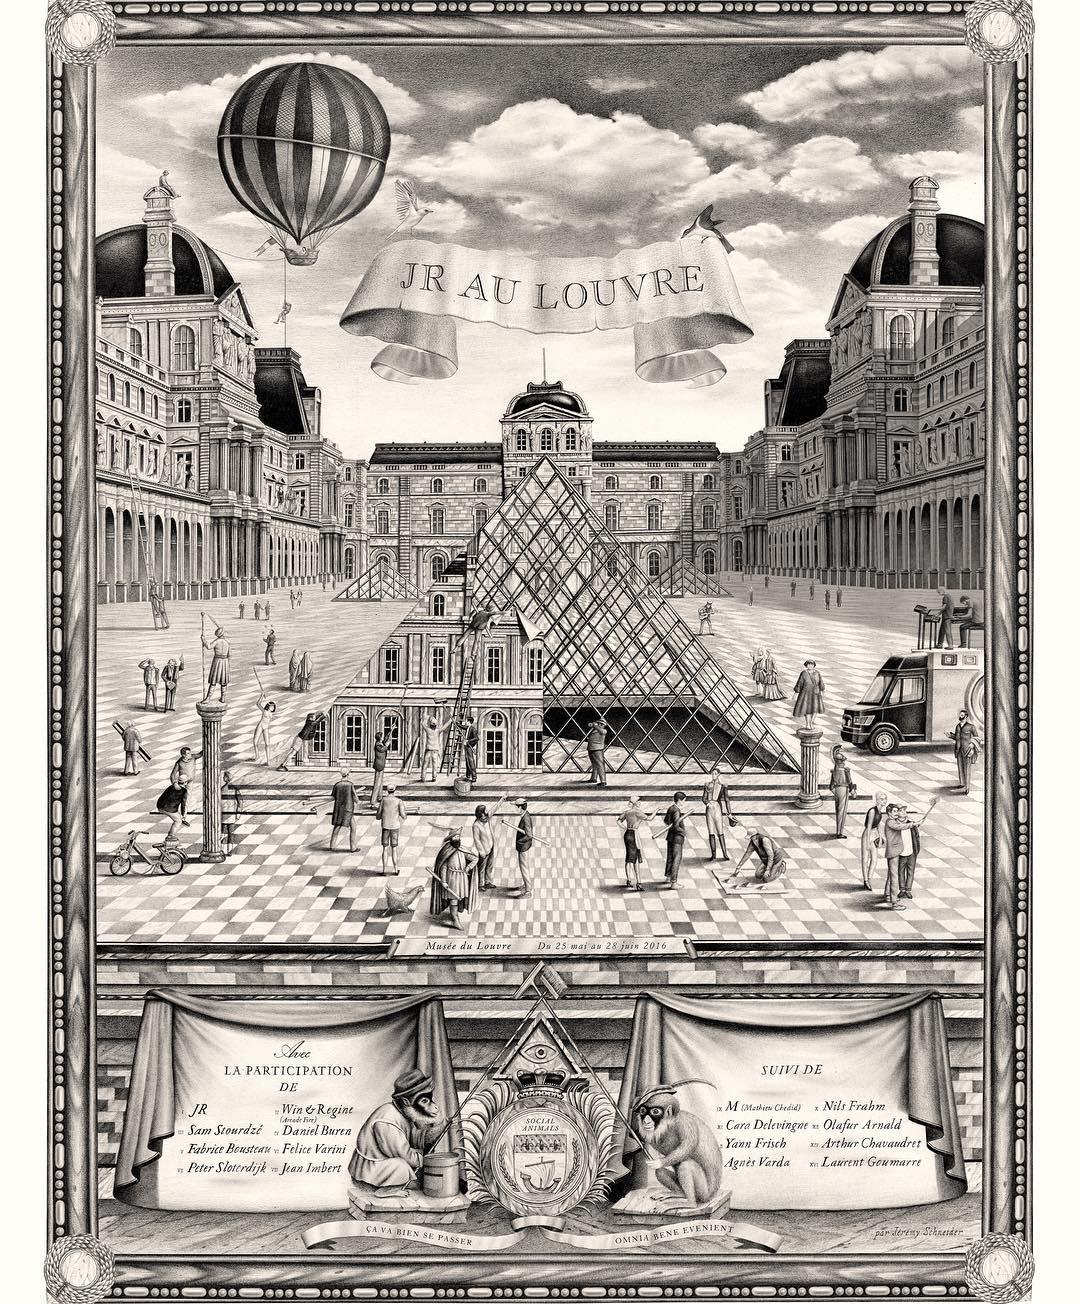 JR's Louvre poster. Image courtesy of JR's Instagram